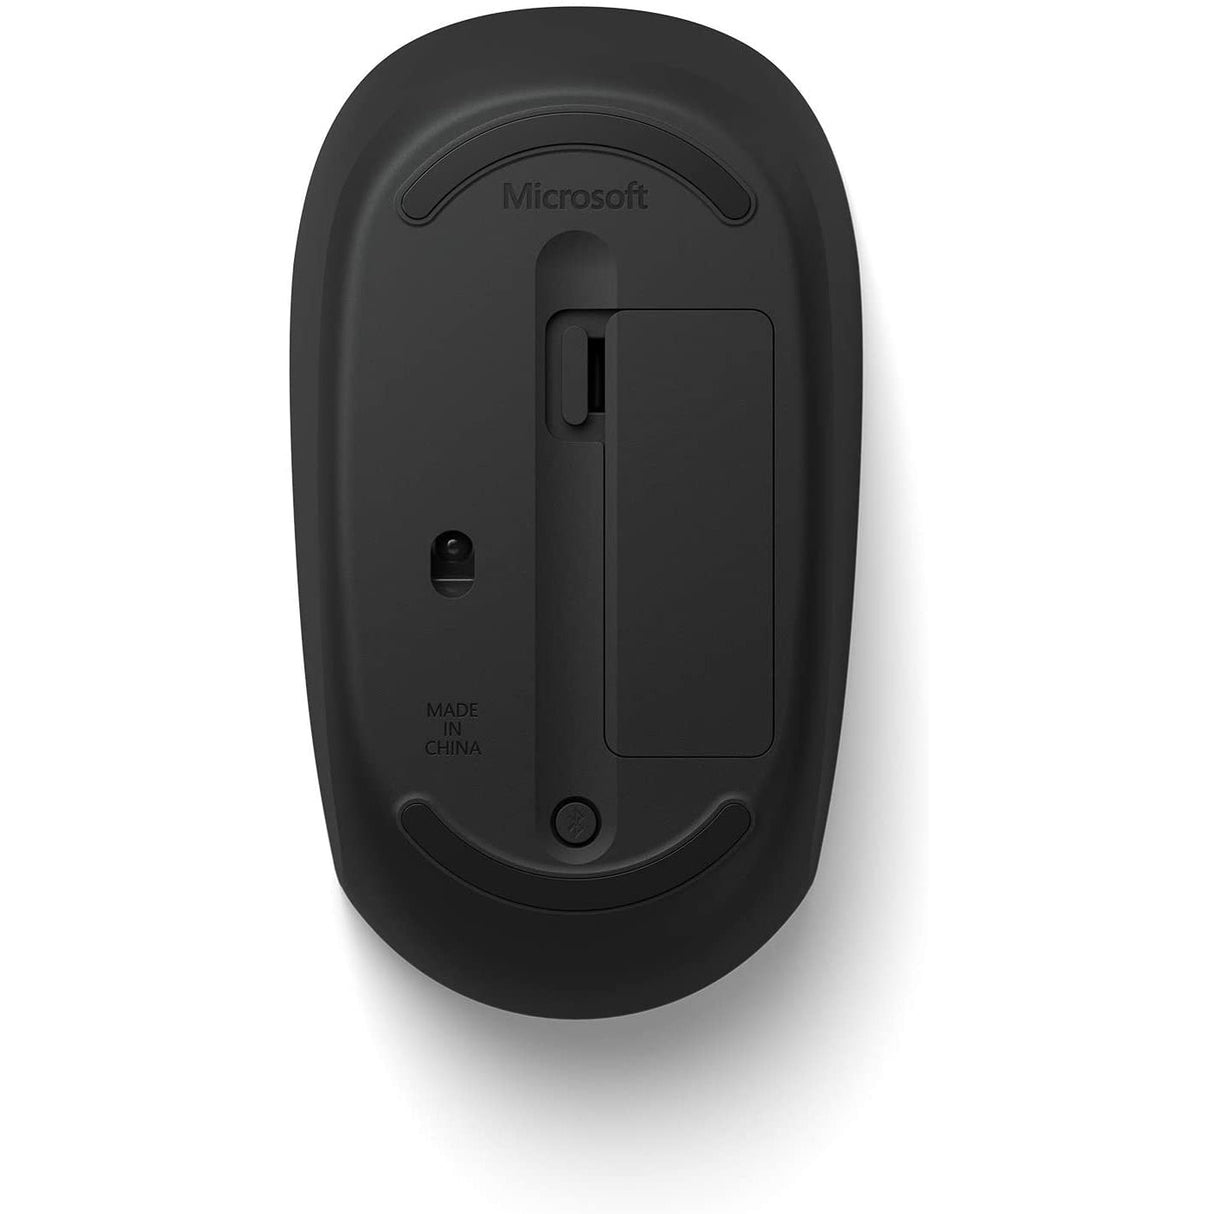 Microsoft RJN-00002 Bluetooth Mouse - Black - New